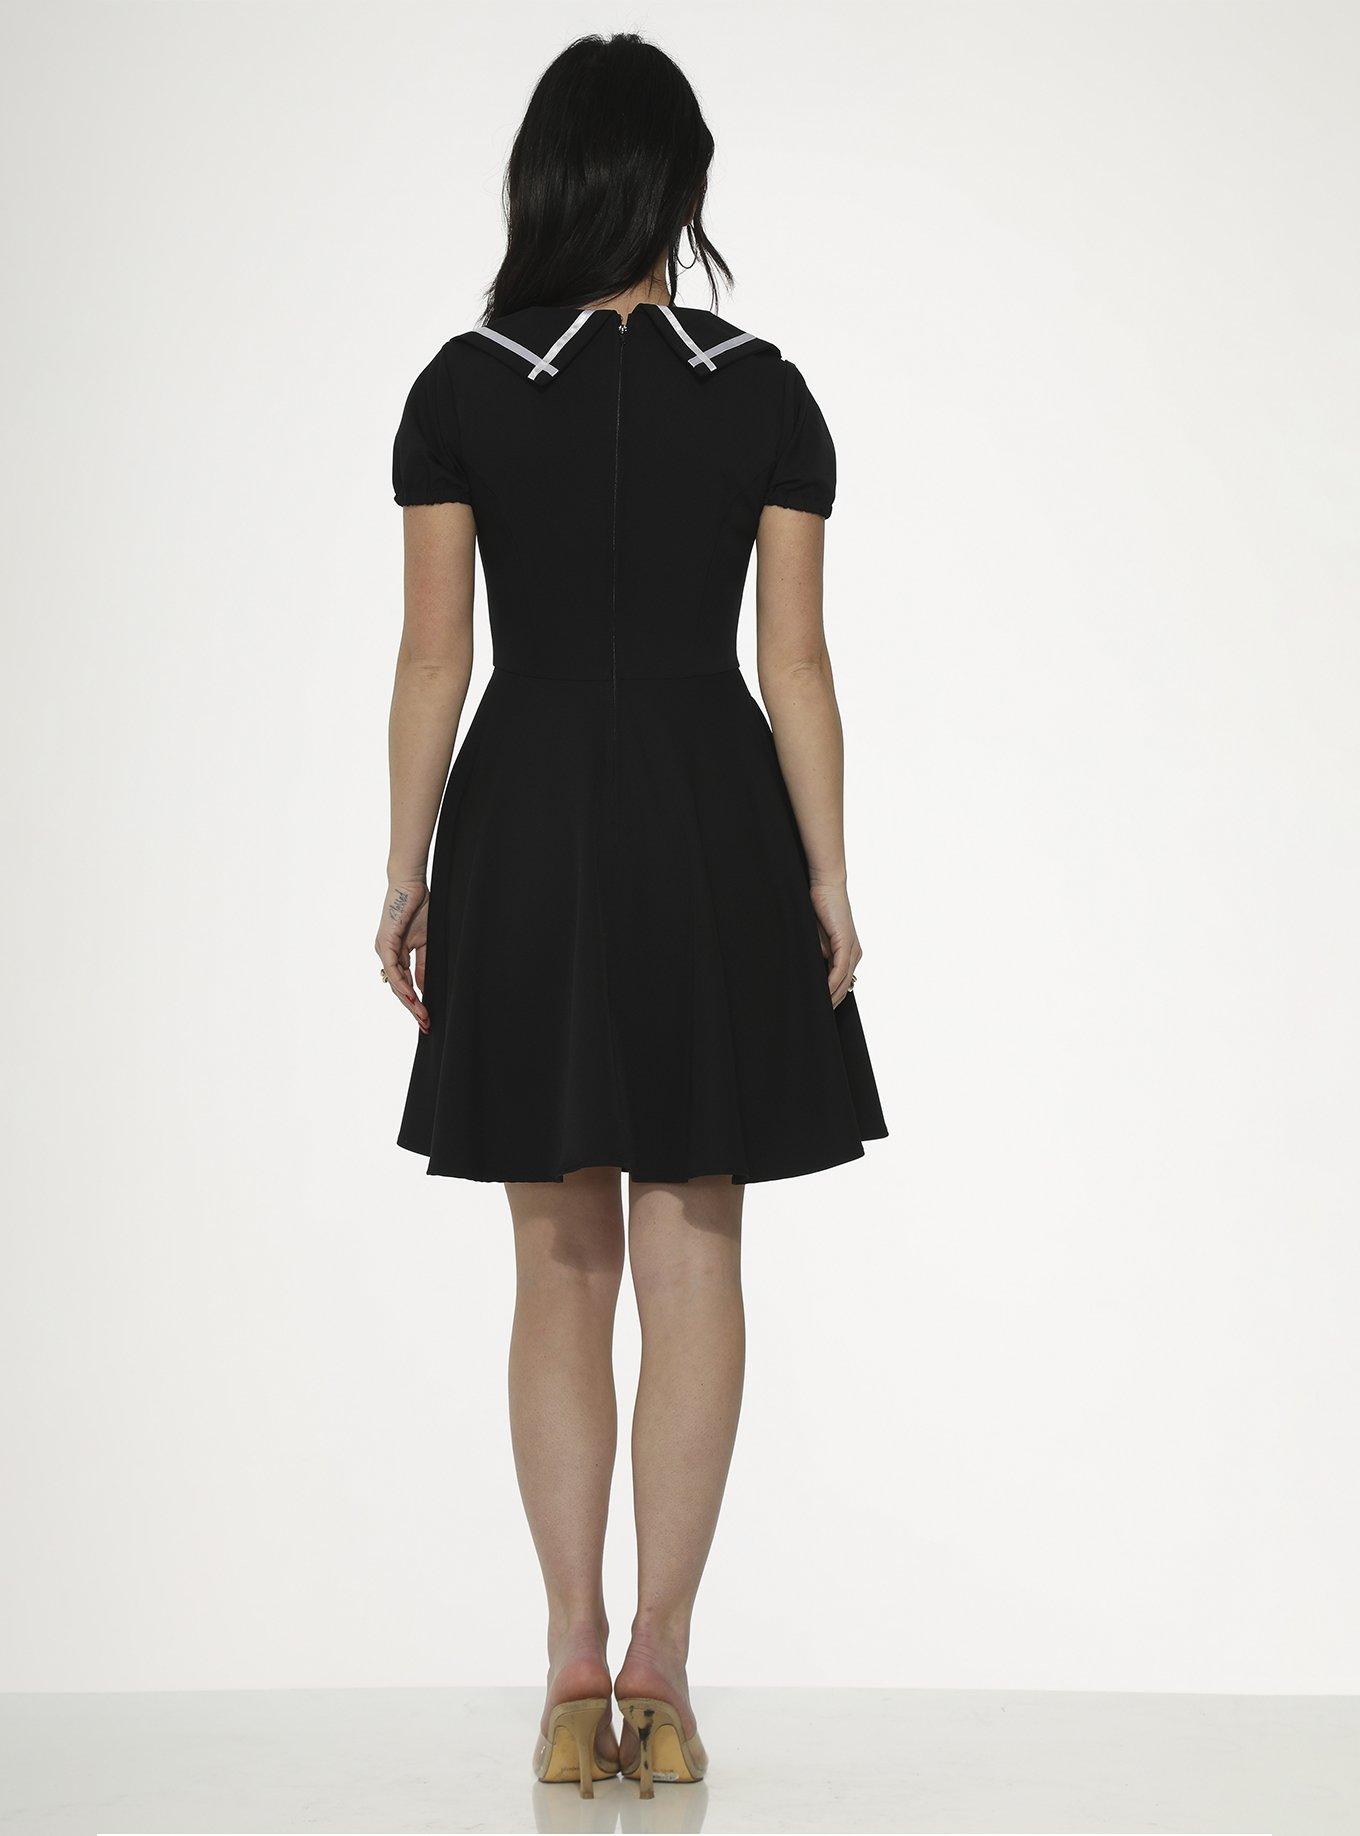 Black White Trim Dress, BLACK  WHITE, alternate